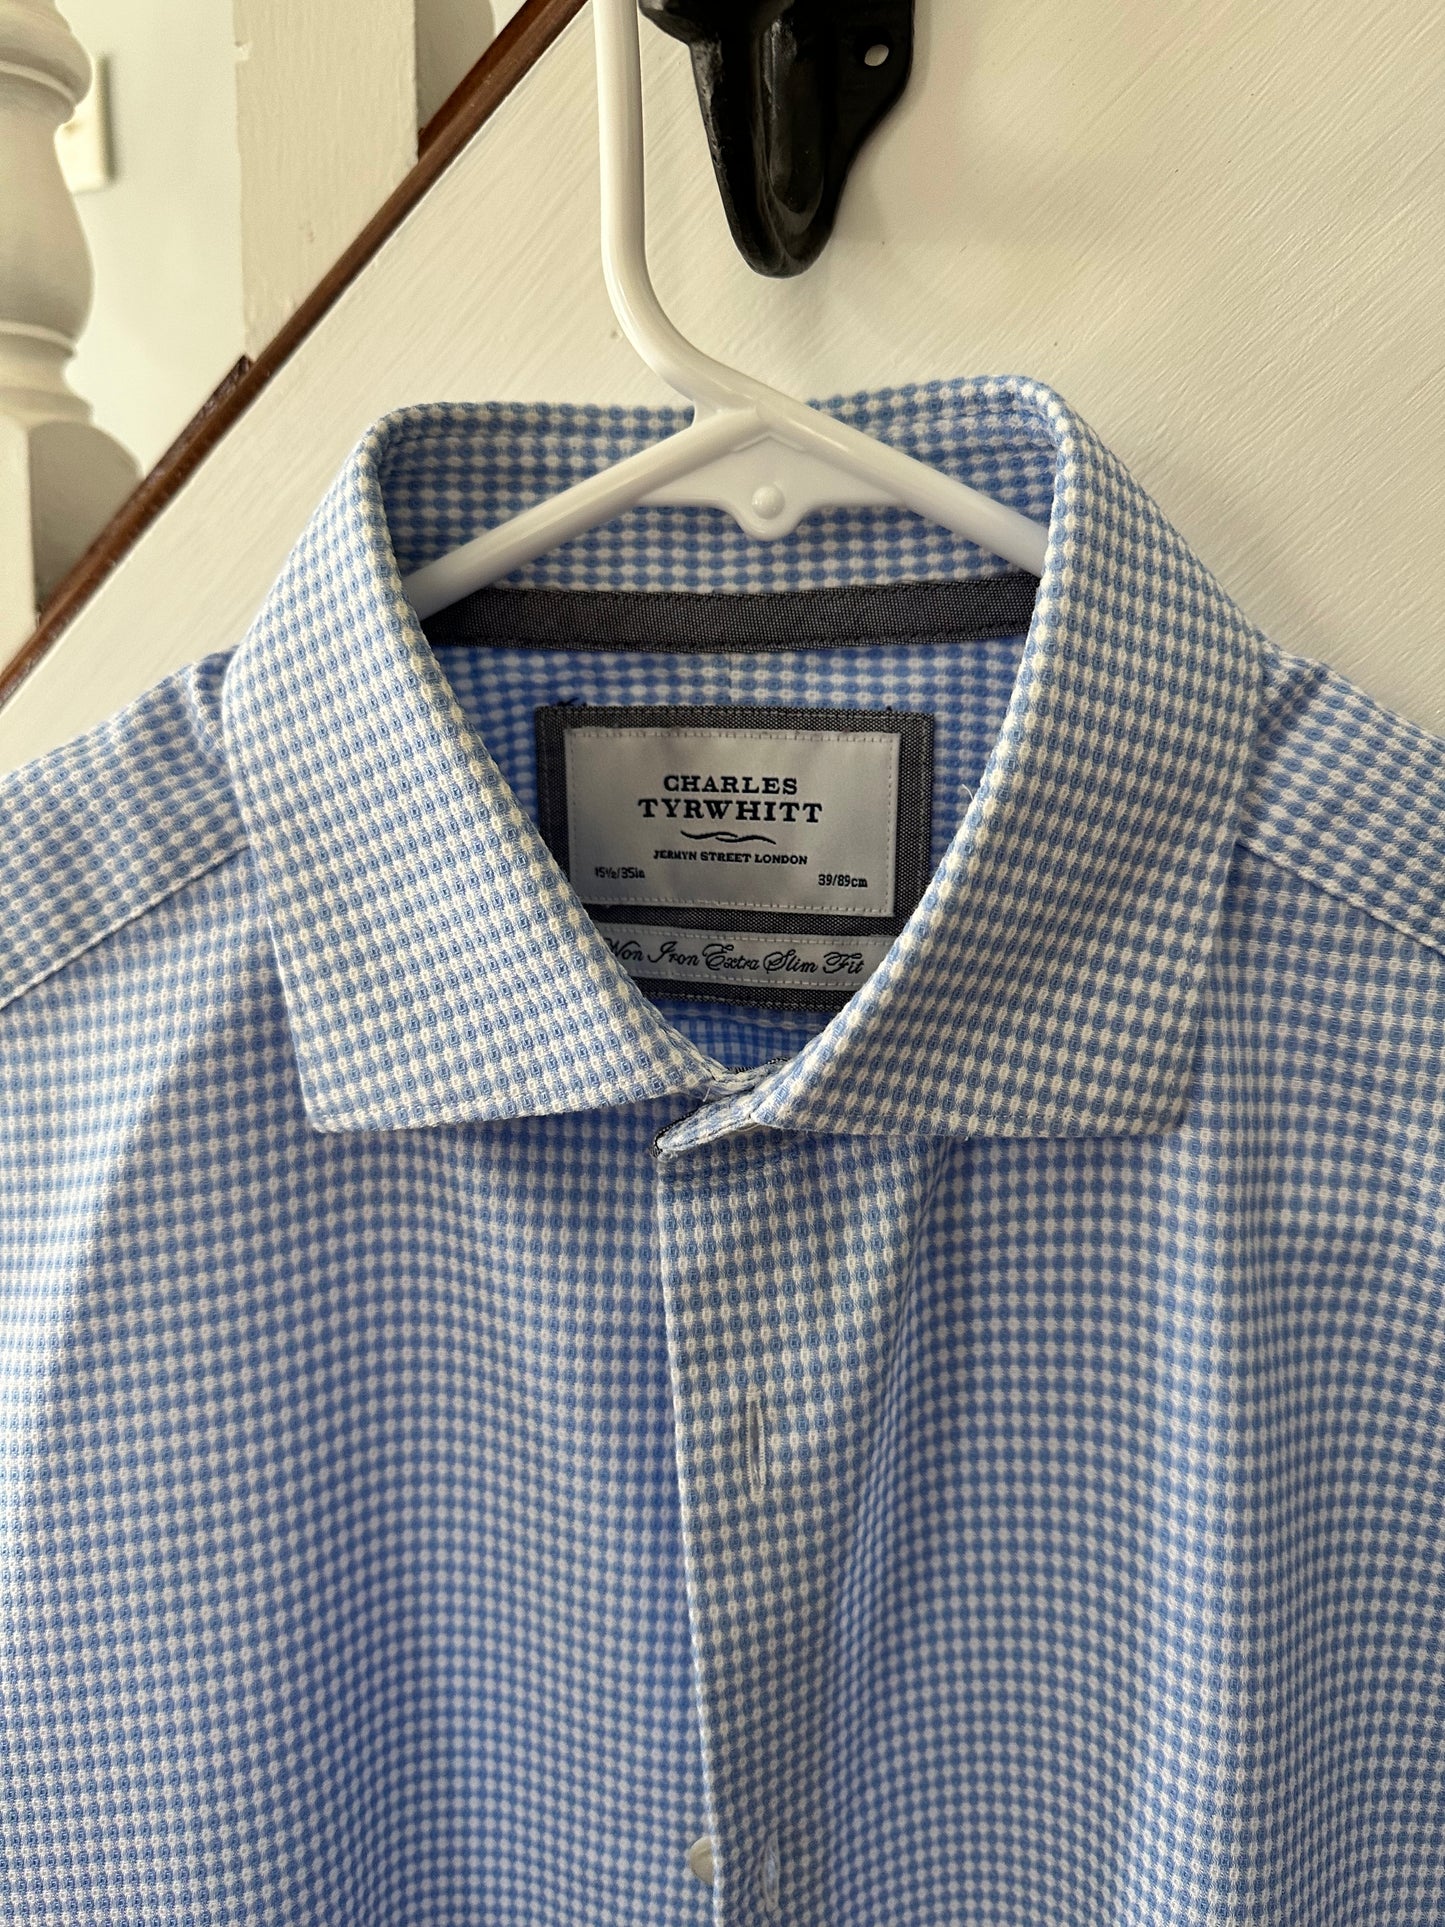 Charles Tyrwhitt Extra Slim Fit Dress Shirt, blue check, Collar: 15 1/2; Sleeve Length: 35in, EUC